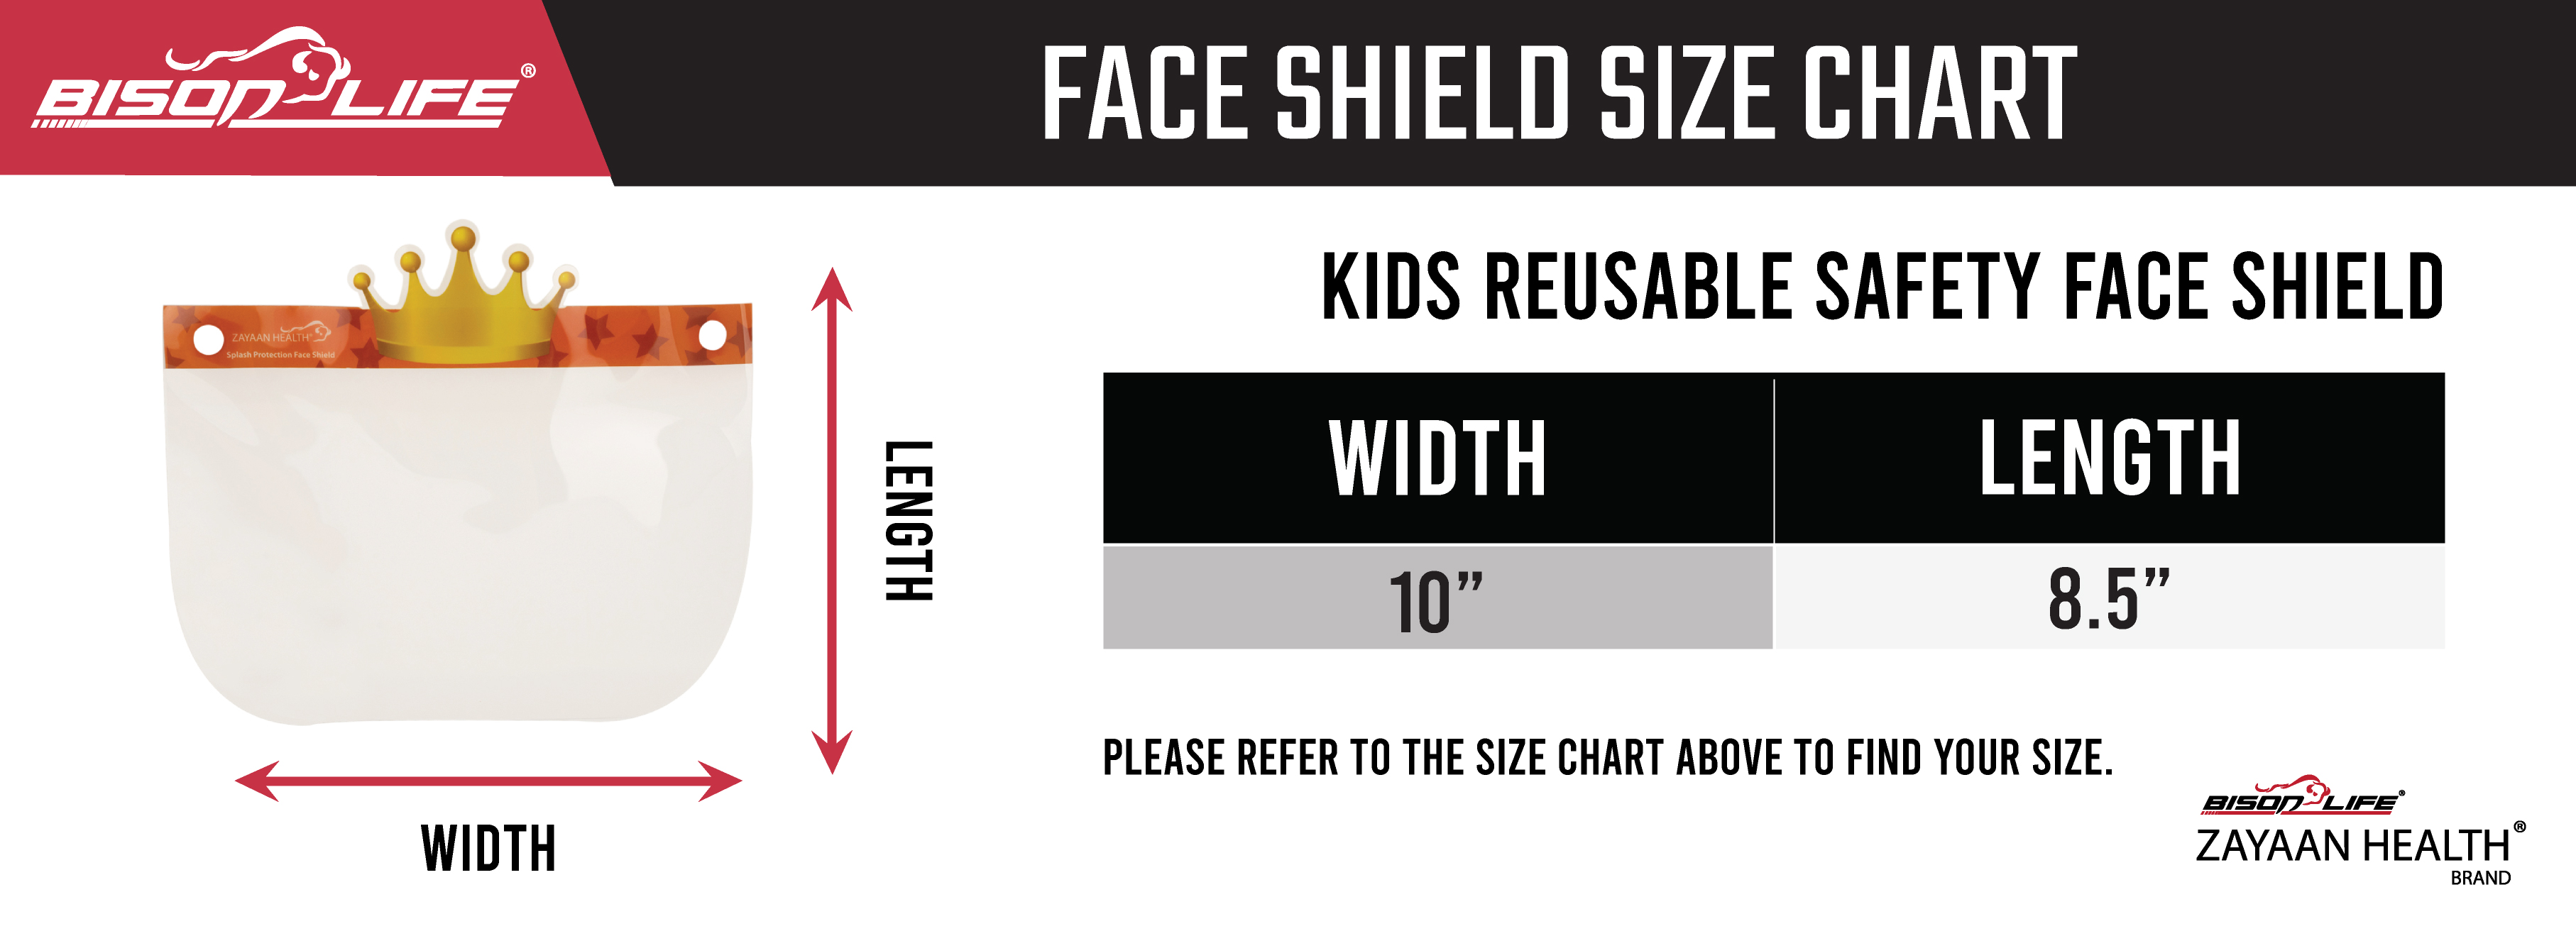 Zayaan Health Kids Reusable Face Safety Shield Size Chart